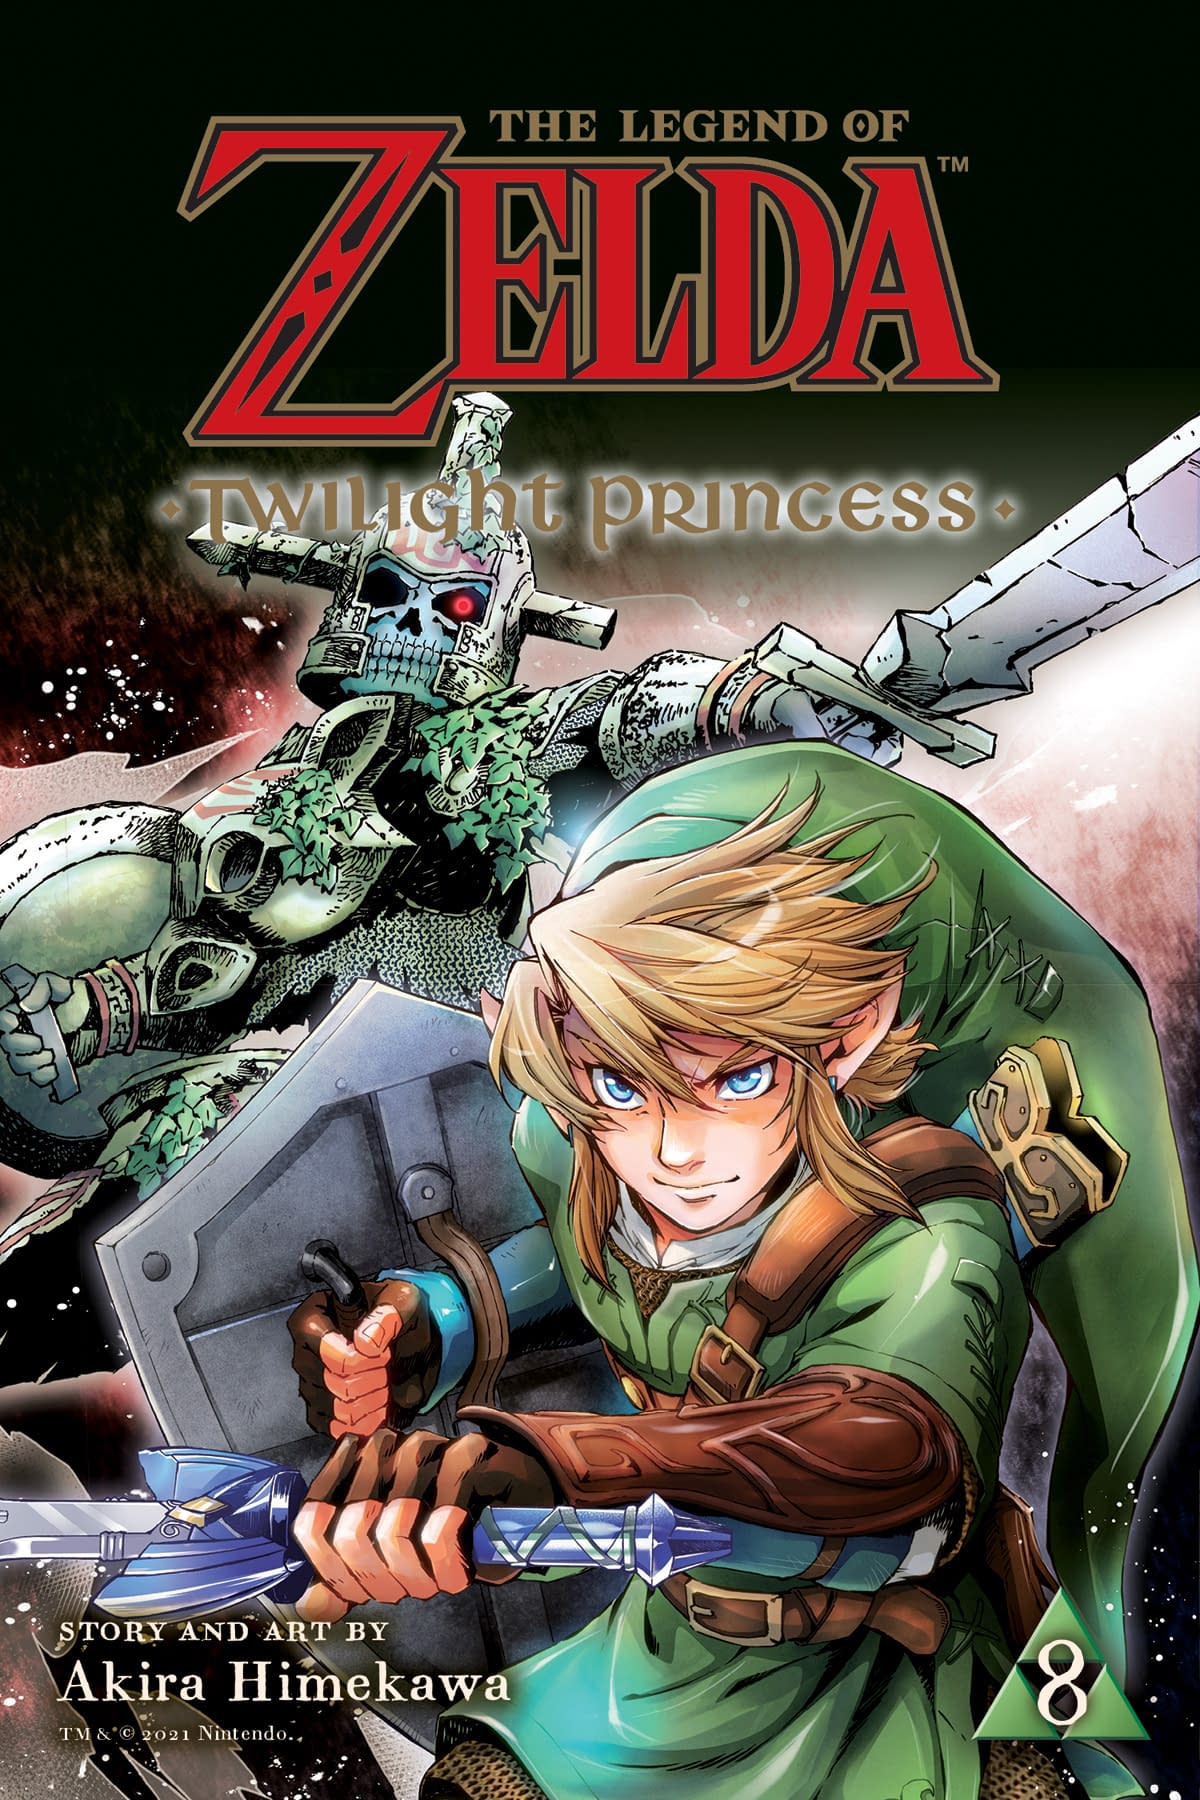 The Legend Of Zelda Twilight Princess Manga Adaptation Nears Its End